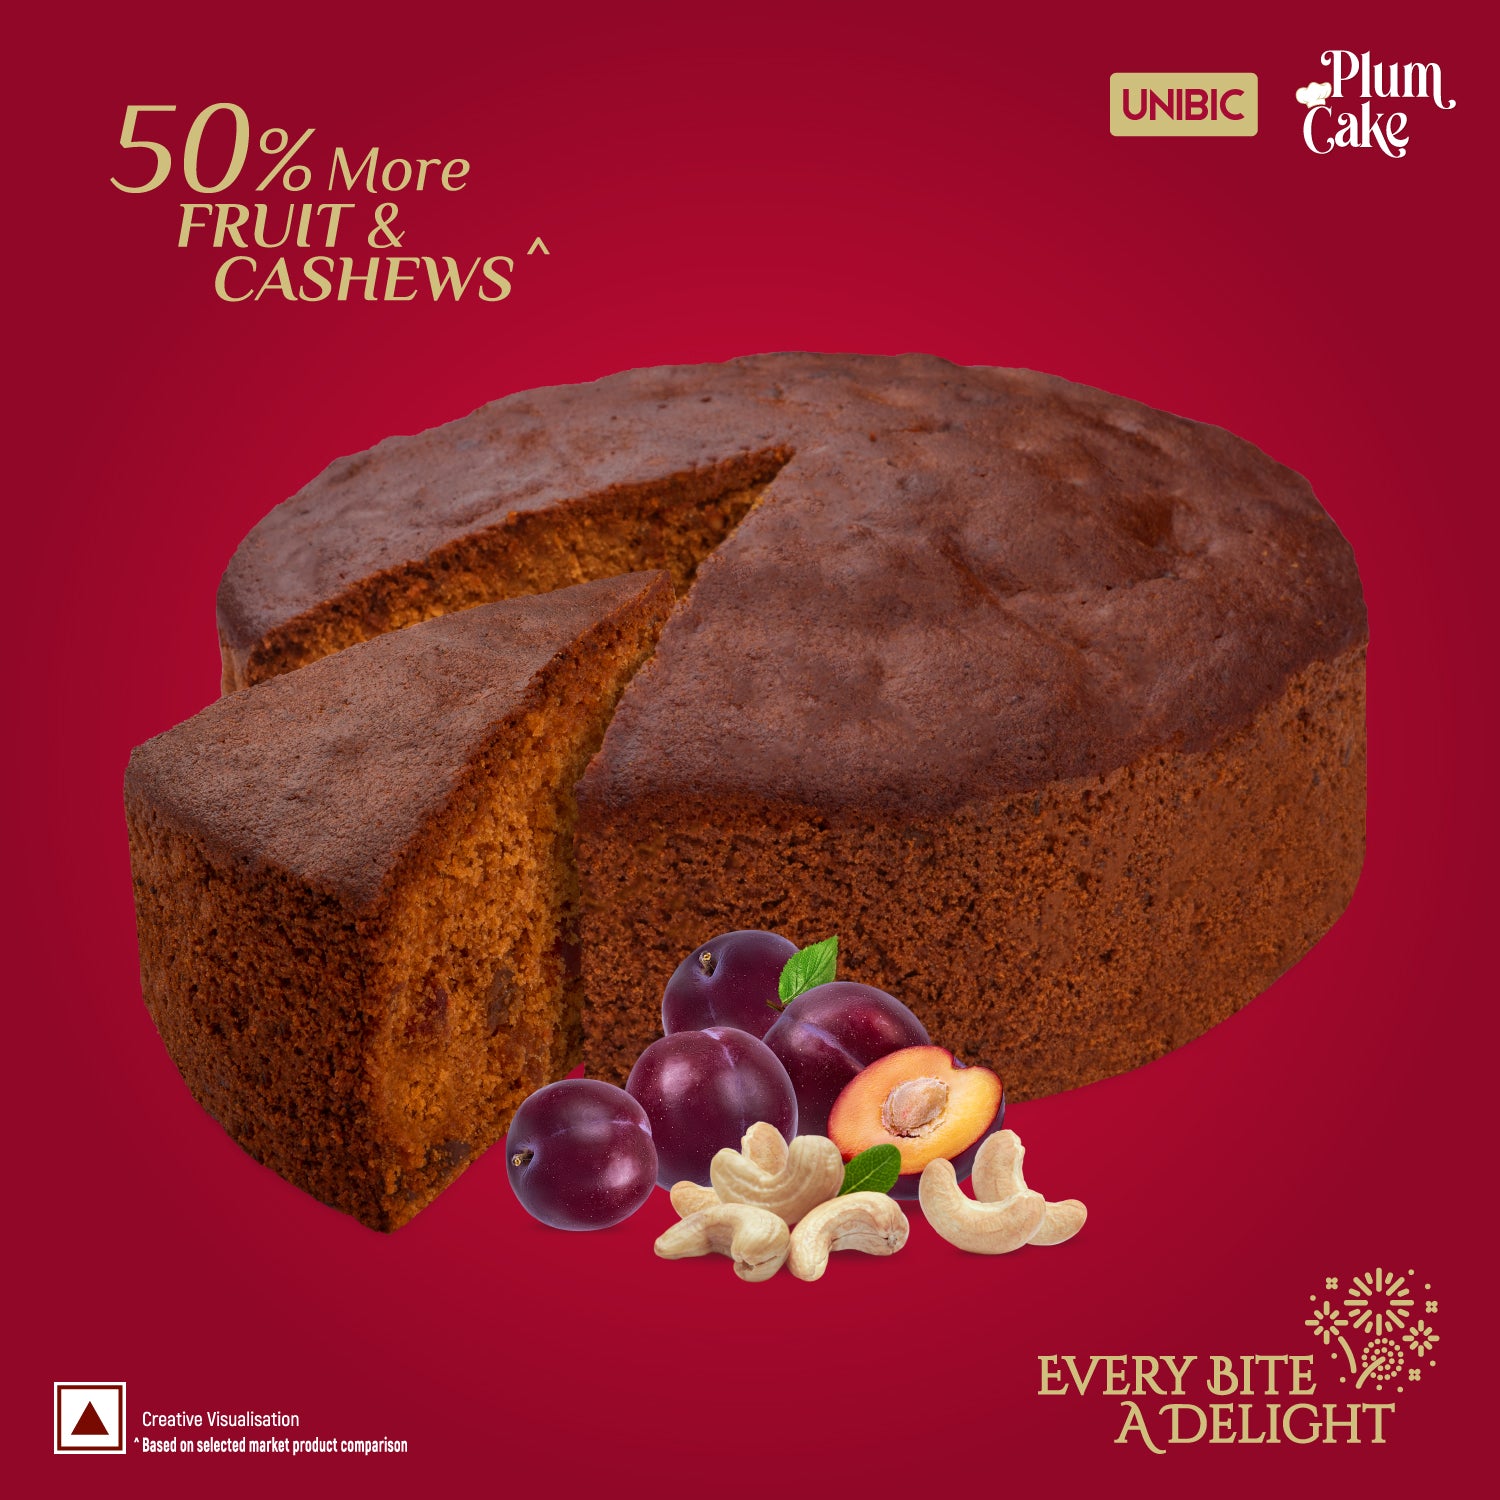 Winkies Walnut Chocolate Cake Price - Buy Online at Best Price in India